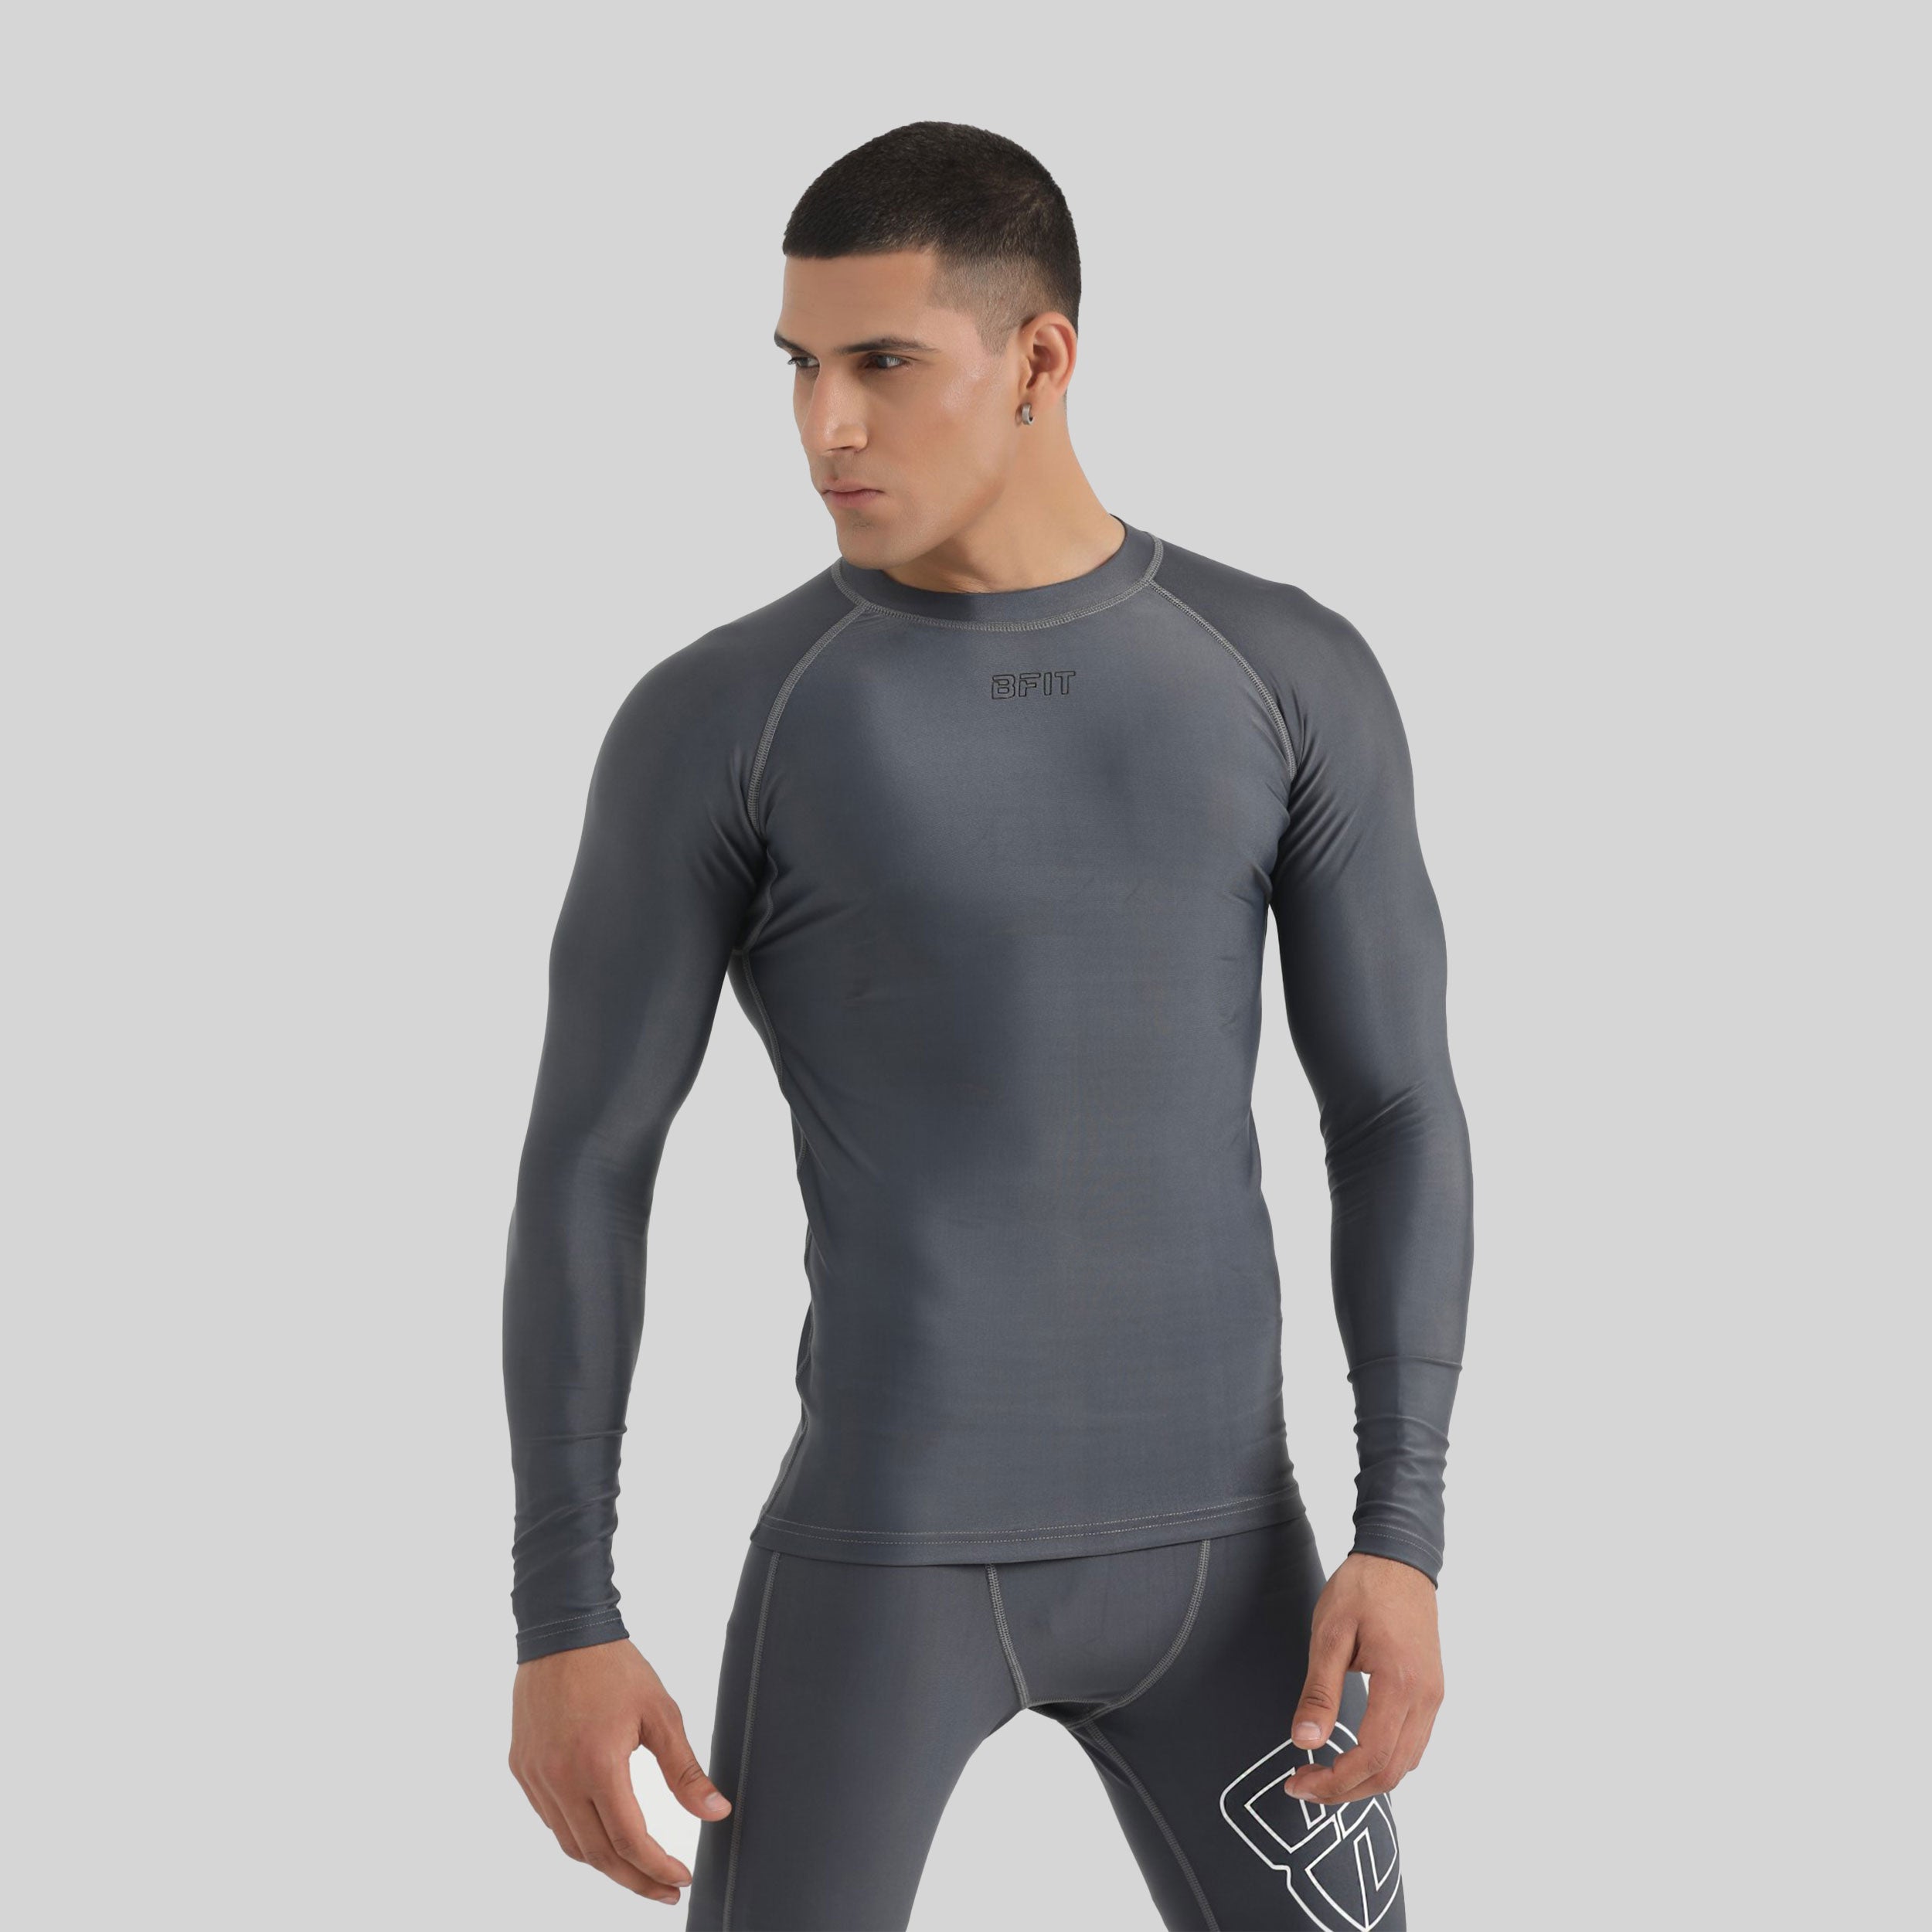 Men's Athletic Base Layer Compression Set - Grey